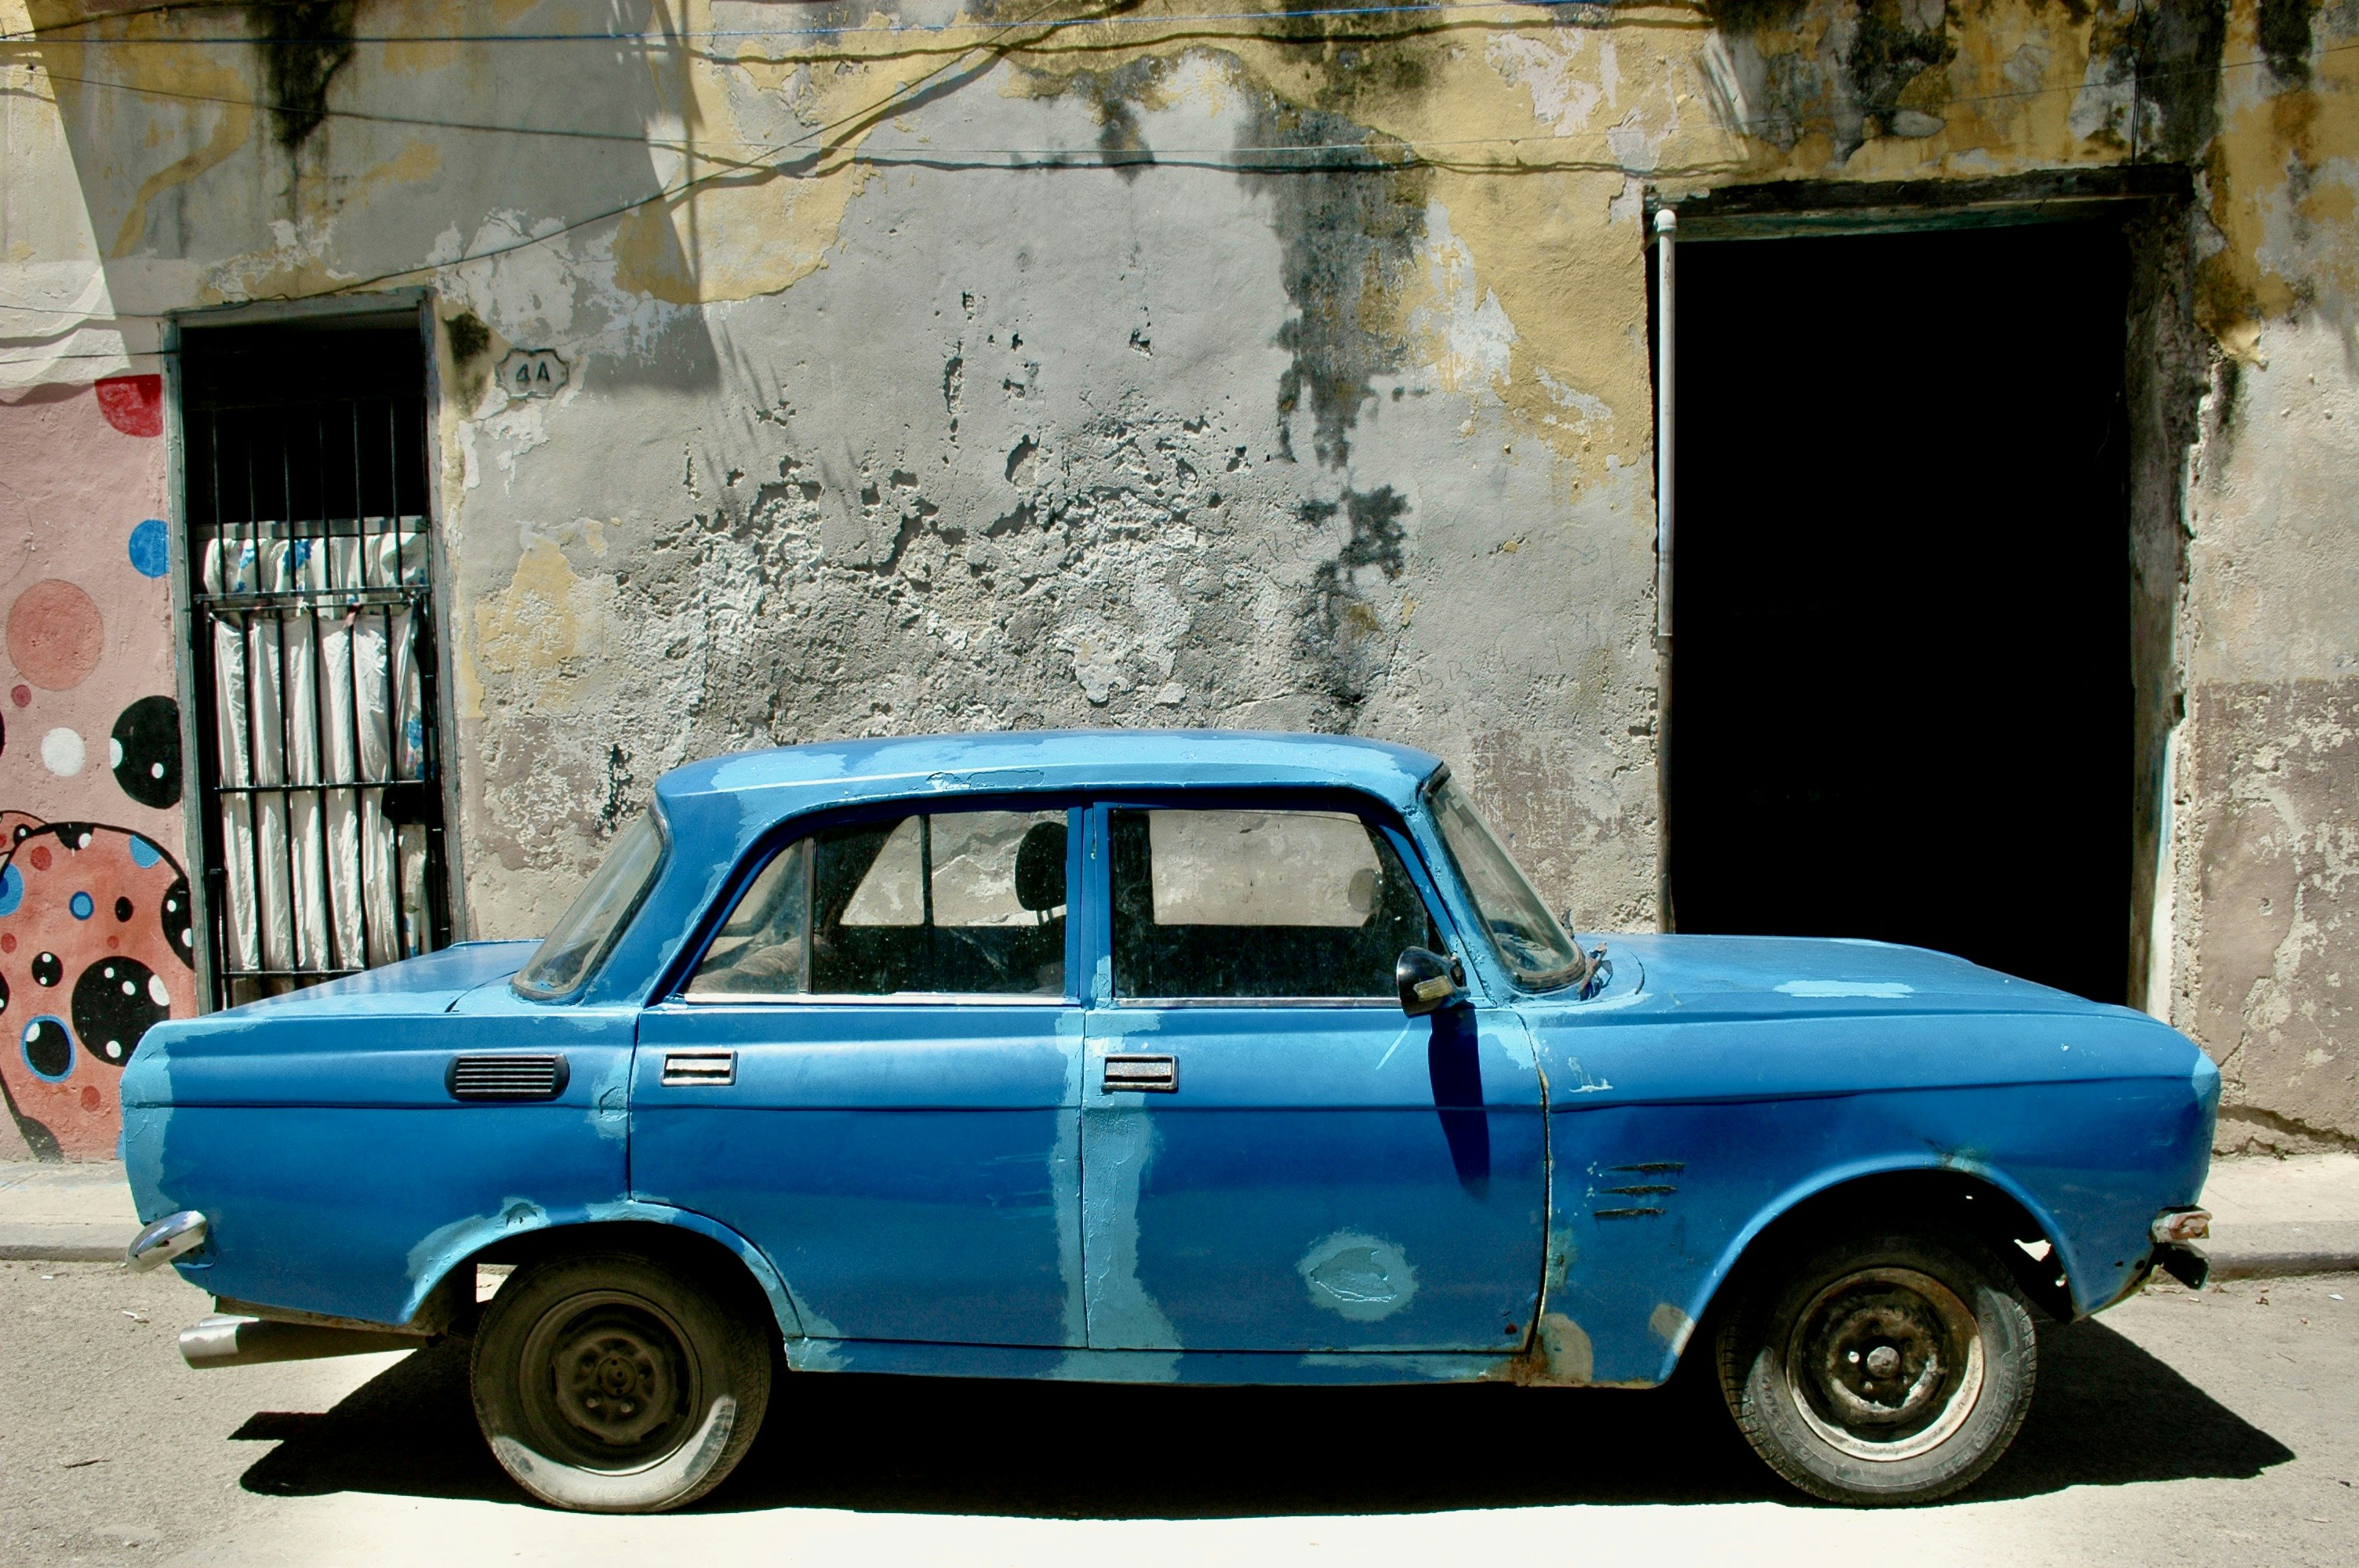 vaz 2106 in the streets of Havana